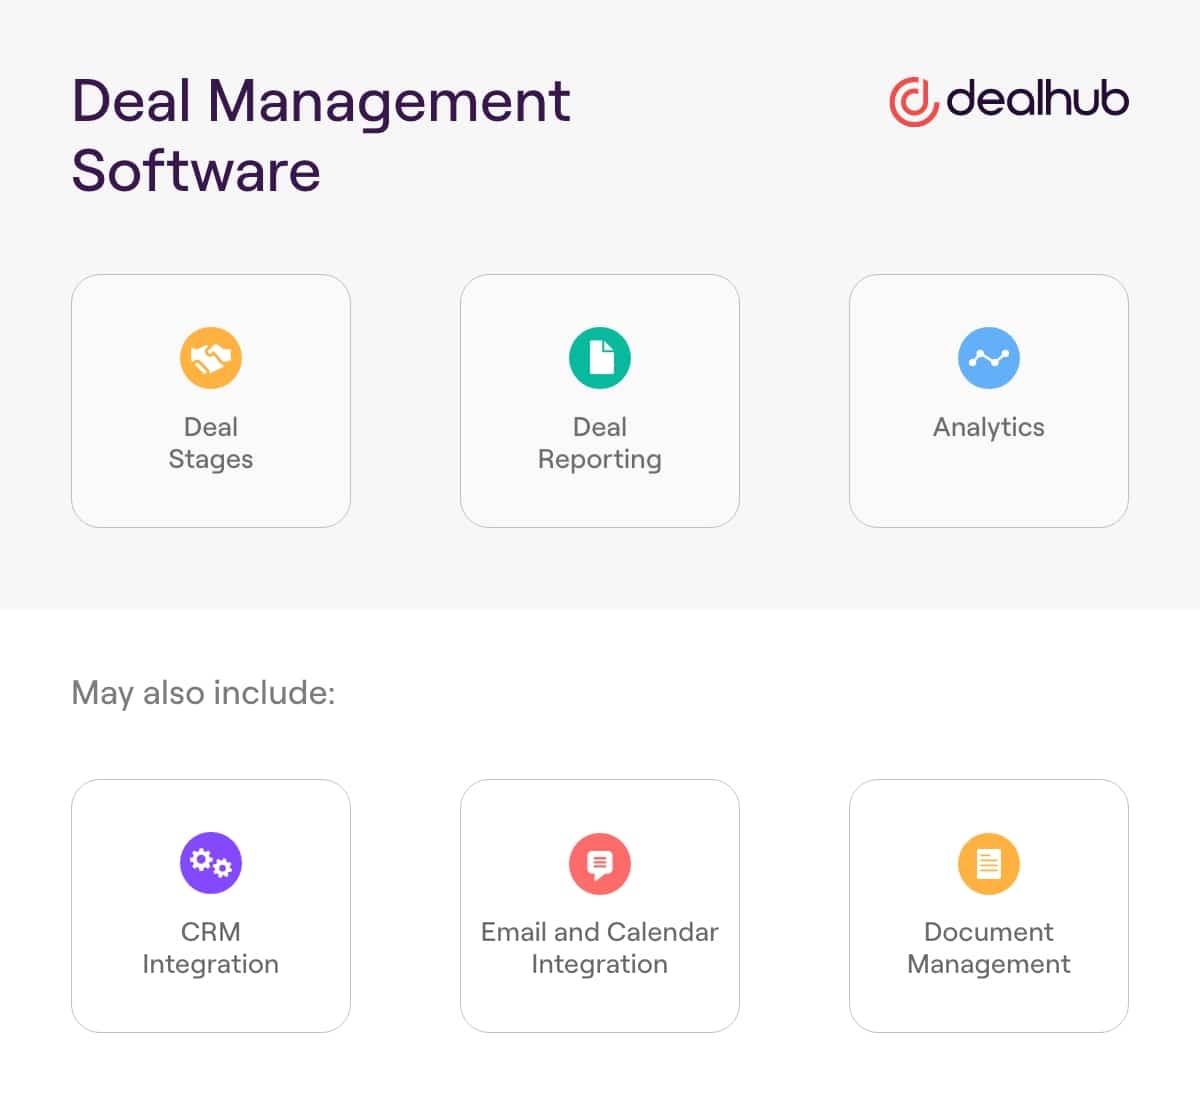 Deal management software